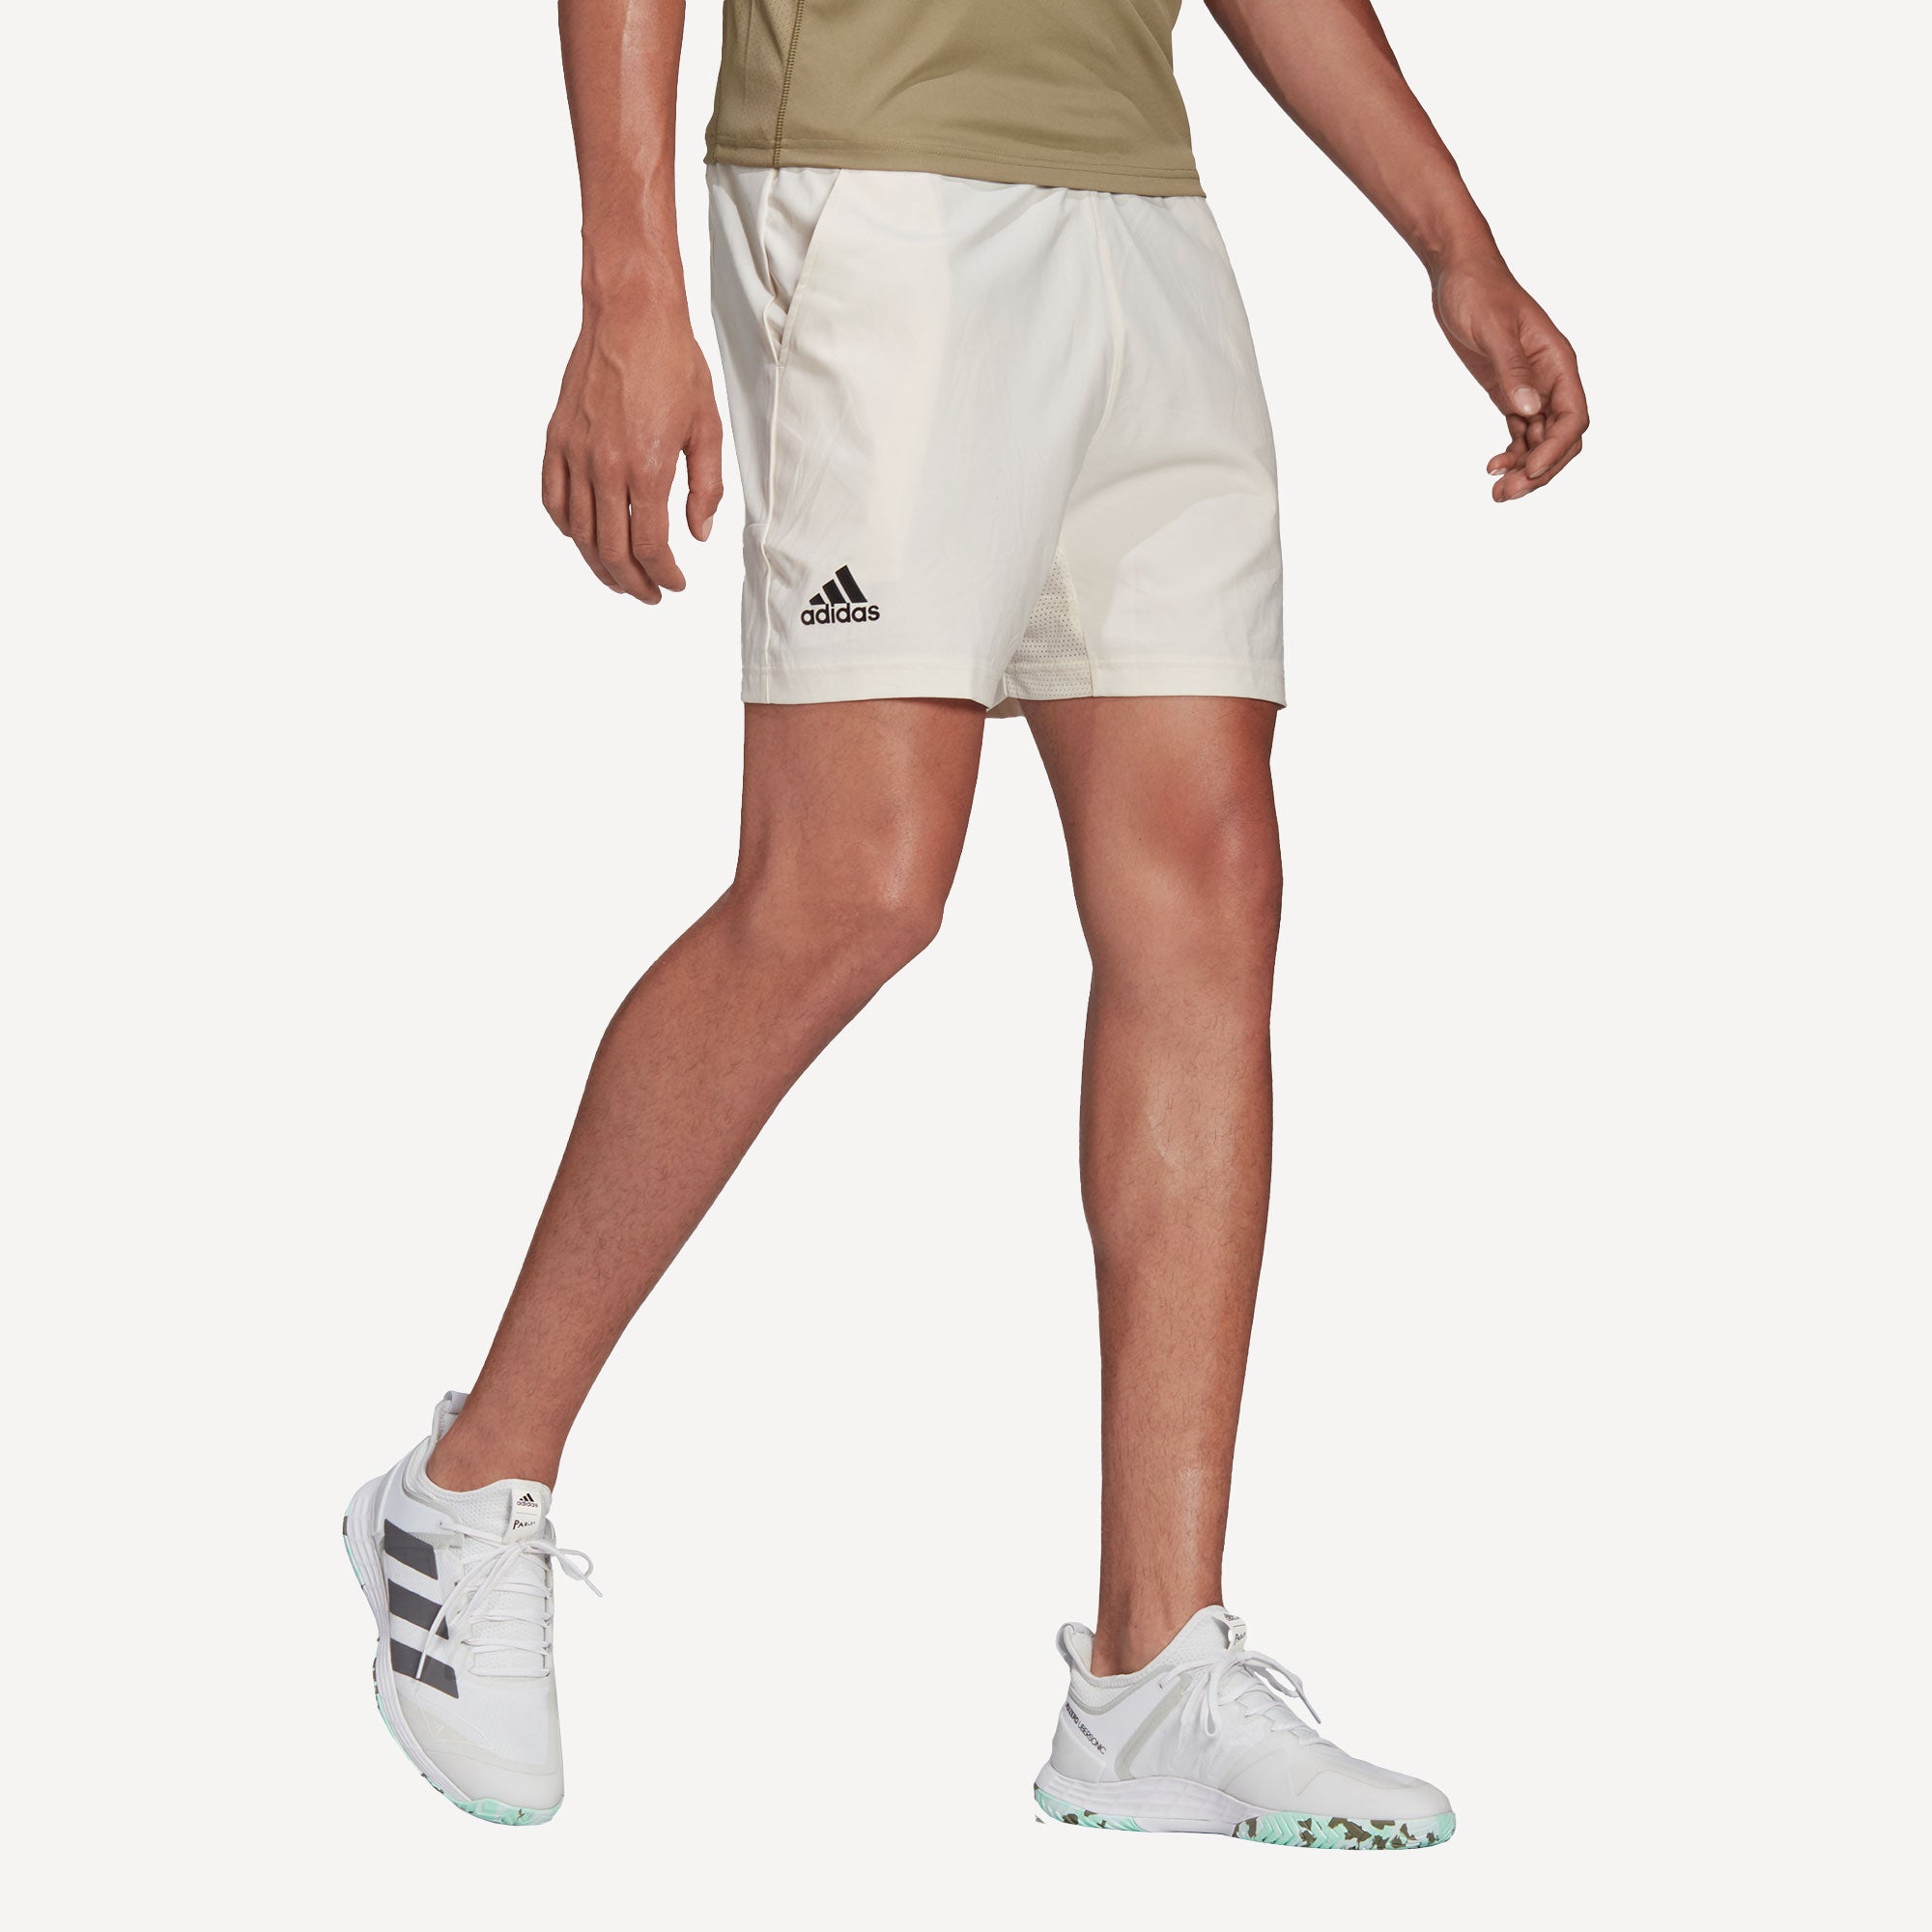 adidas Ergo Primeblue Men's 7-Inch Tennis Shorts White (1)